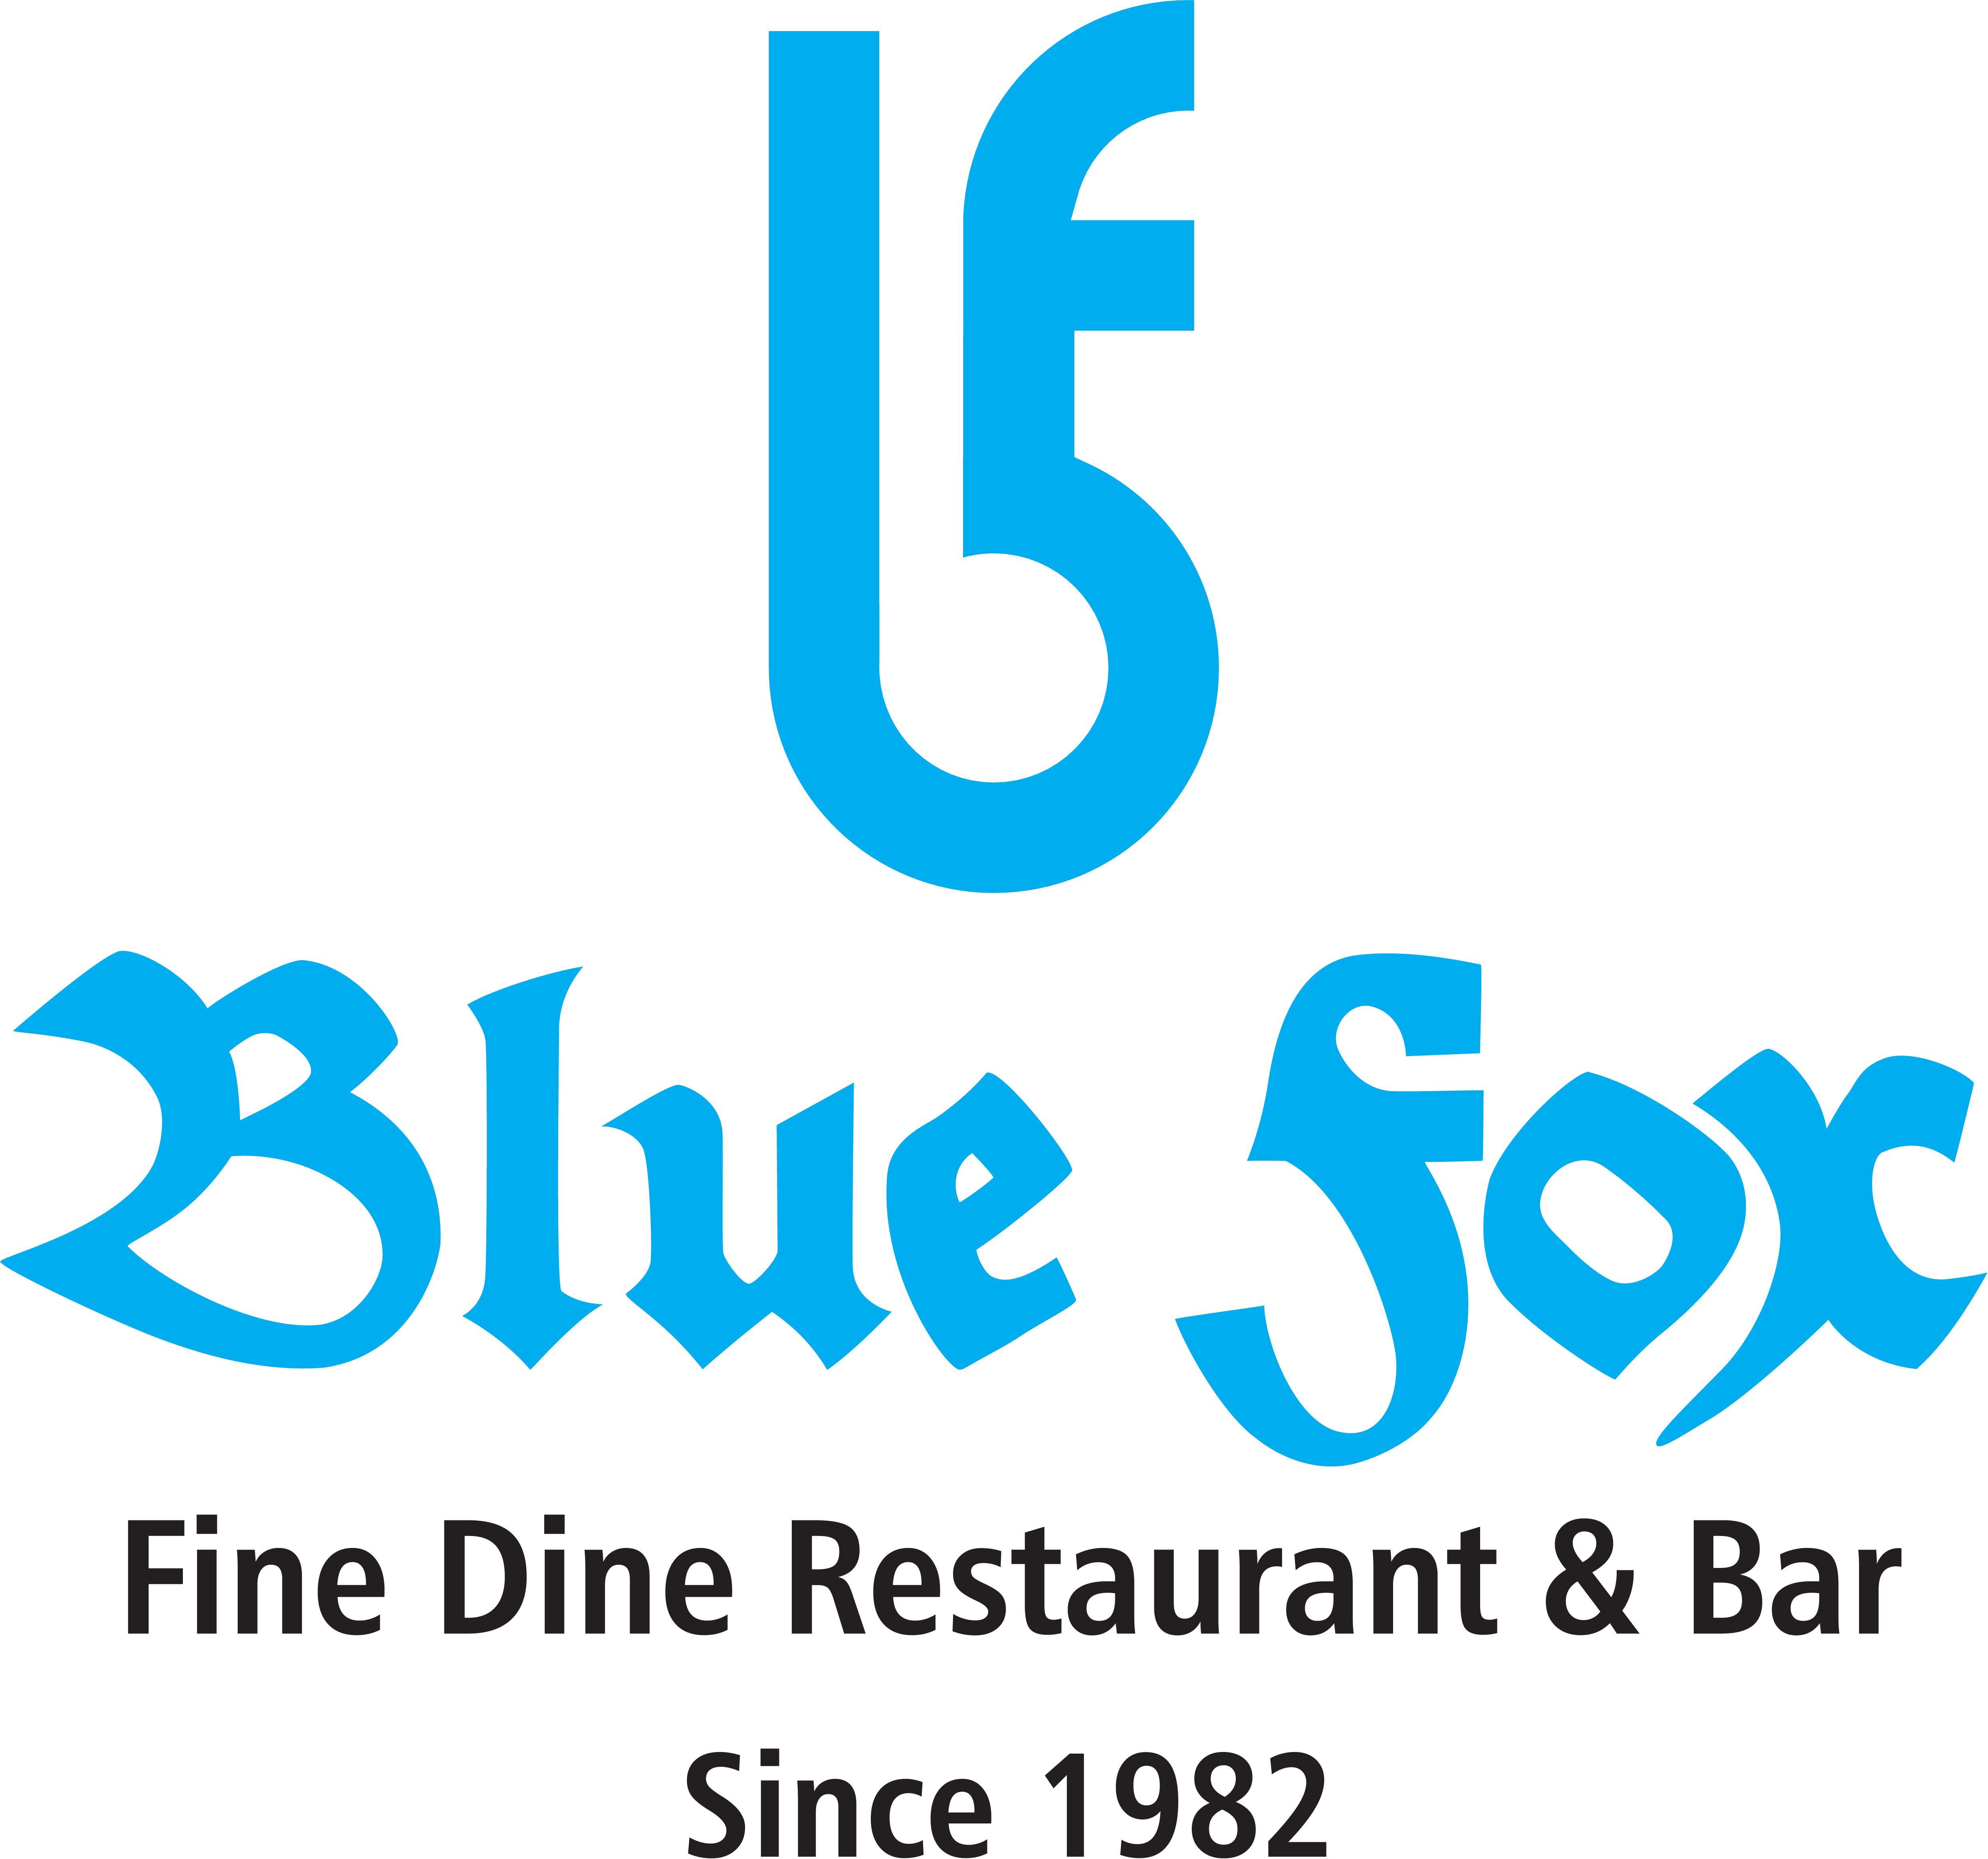 Blue Fox Fine-dine Restaurant & Bar At Himayatnagar - Blue Fox Restaurant & Bar (4979x4656)